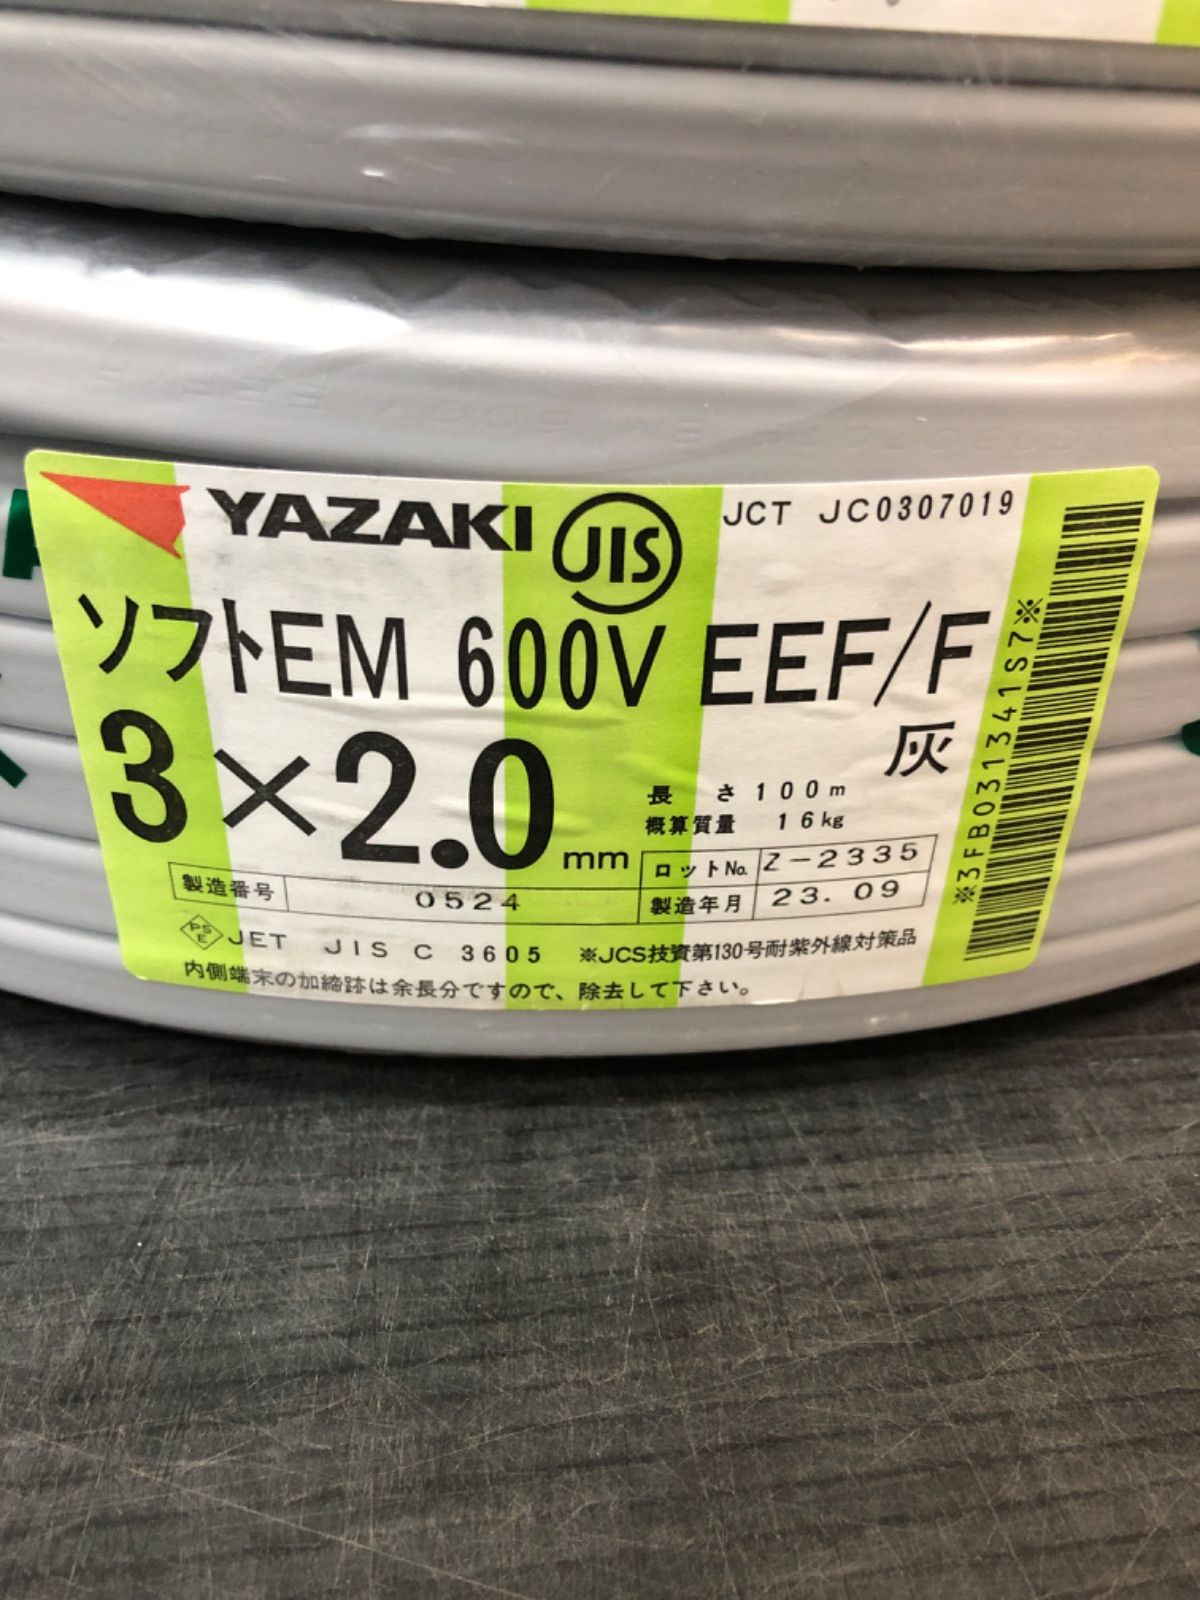 《XY320E/XY32EG》矢崎 ソフトEM-EEF/F ケーブル 黒赤緑 3×2.0 600V  2巻セット 未使用品 資材建築 改装工事